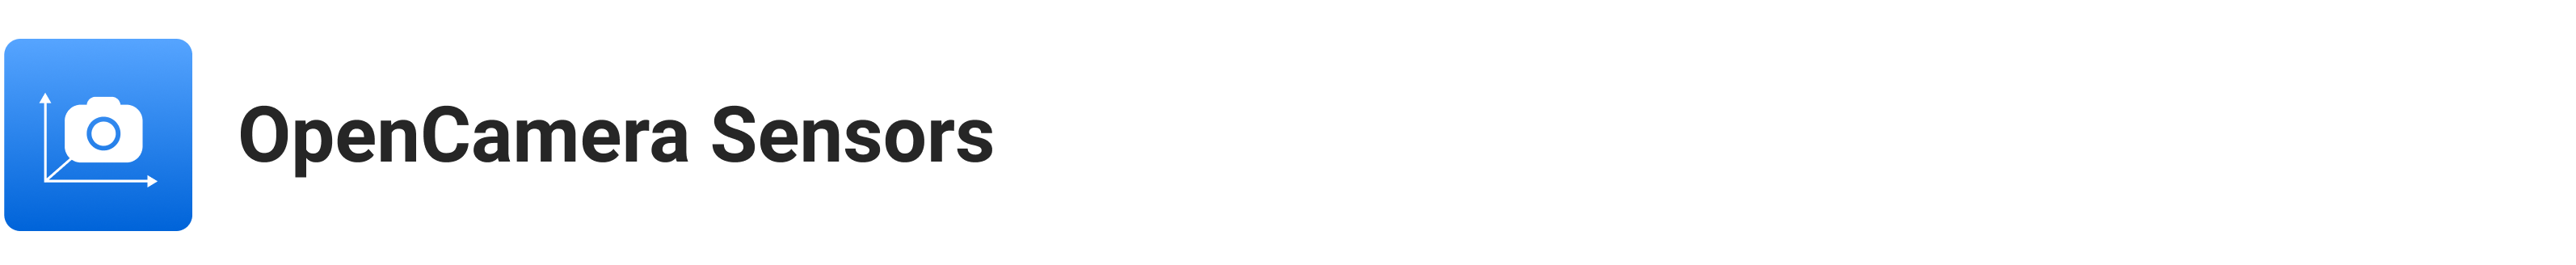 OpenCamera Sensors logo